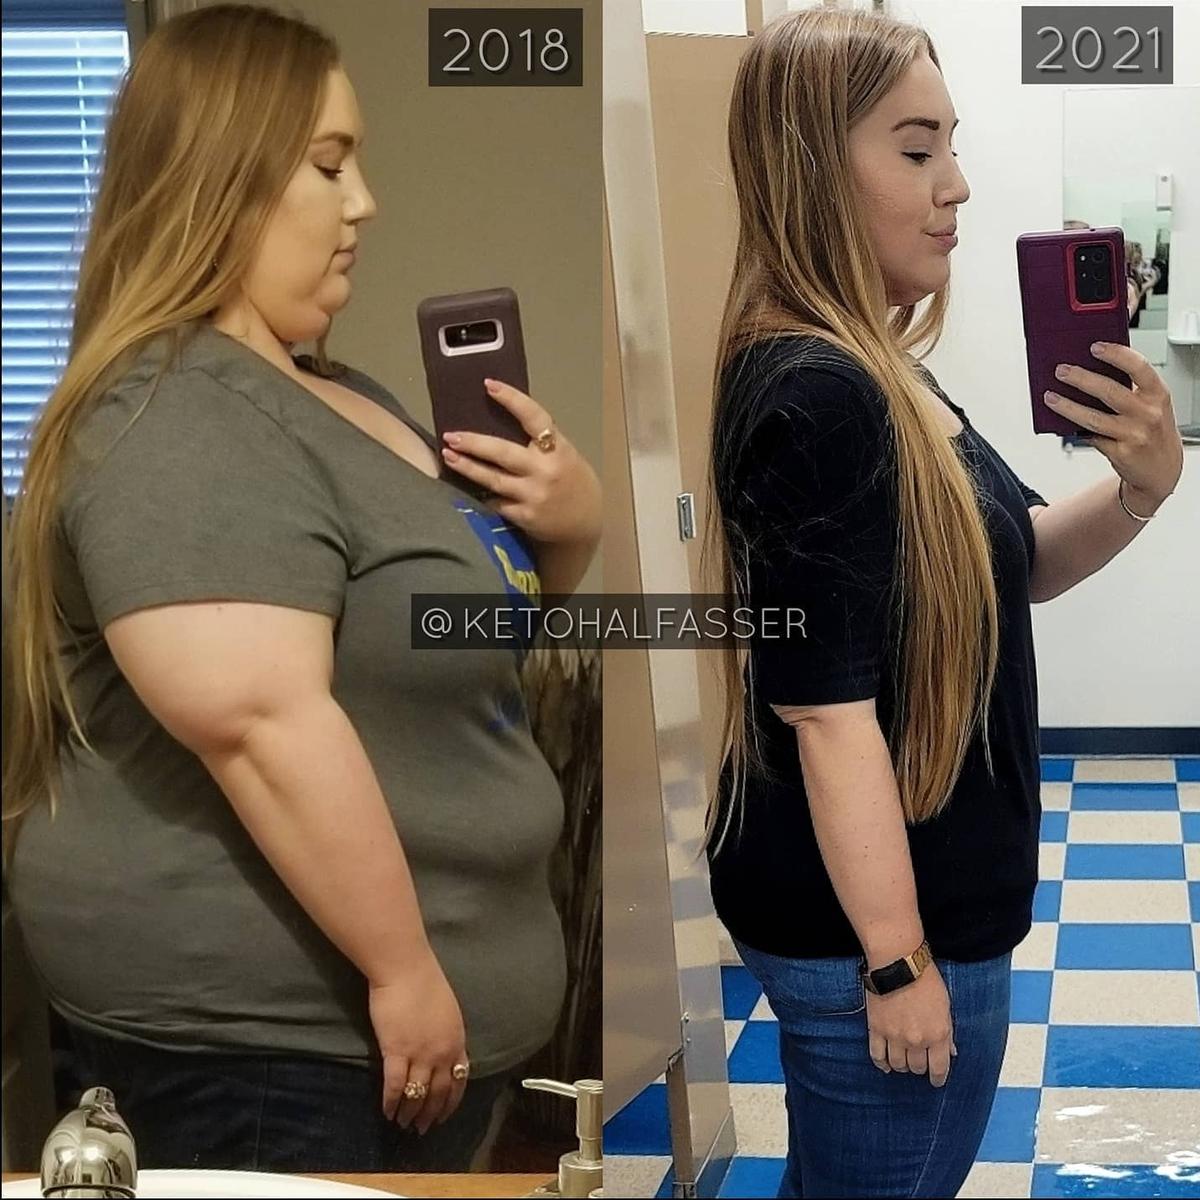 (Left) Ms. Bishop before her weight loss journey began. (Right) Ms. Bishop after her weight loss journey. (Courtesy of <a href="https://www.instagram.com/ketohalfasser/">Chelsey Bishop</a>)